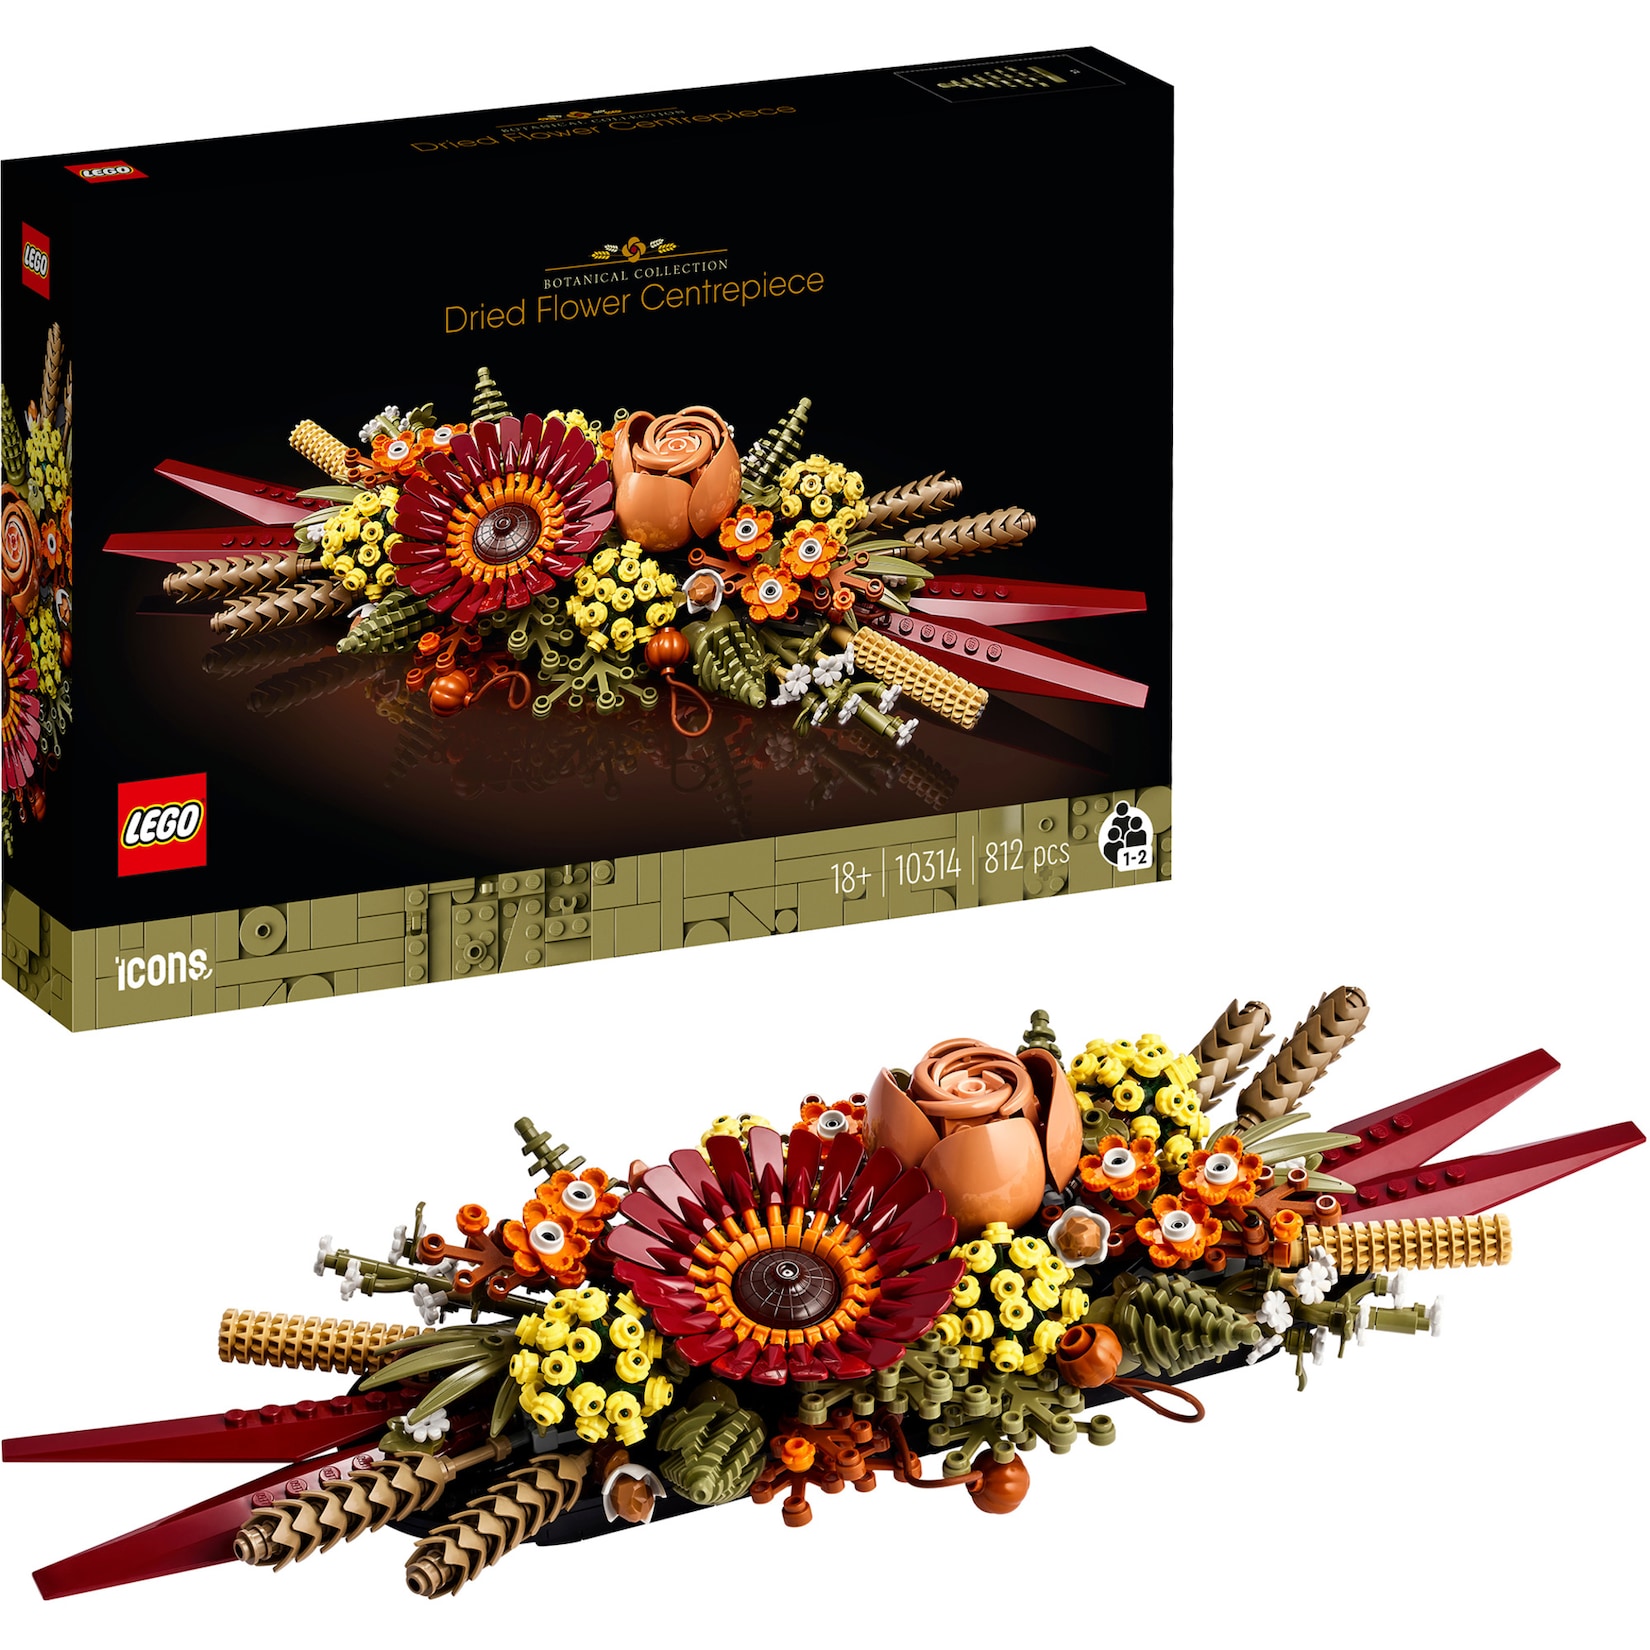 LEGO Konstruktionsspielzeug Botanical Collection Trockenblumengesteck